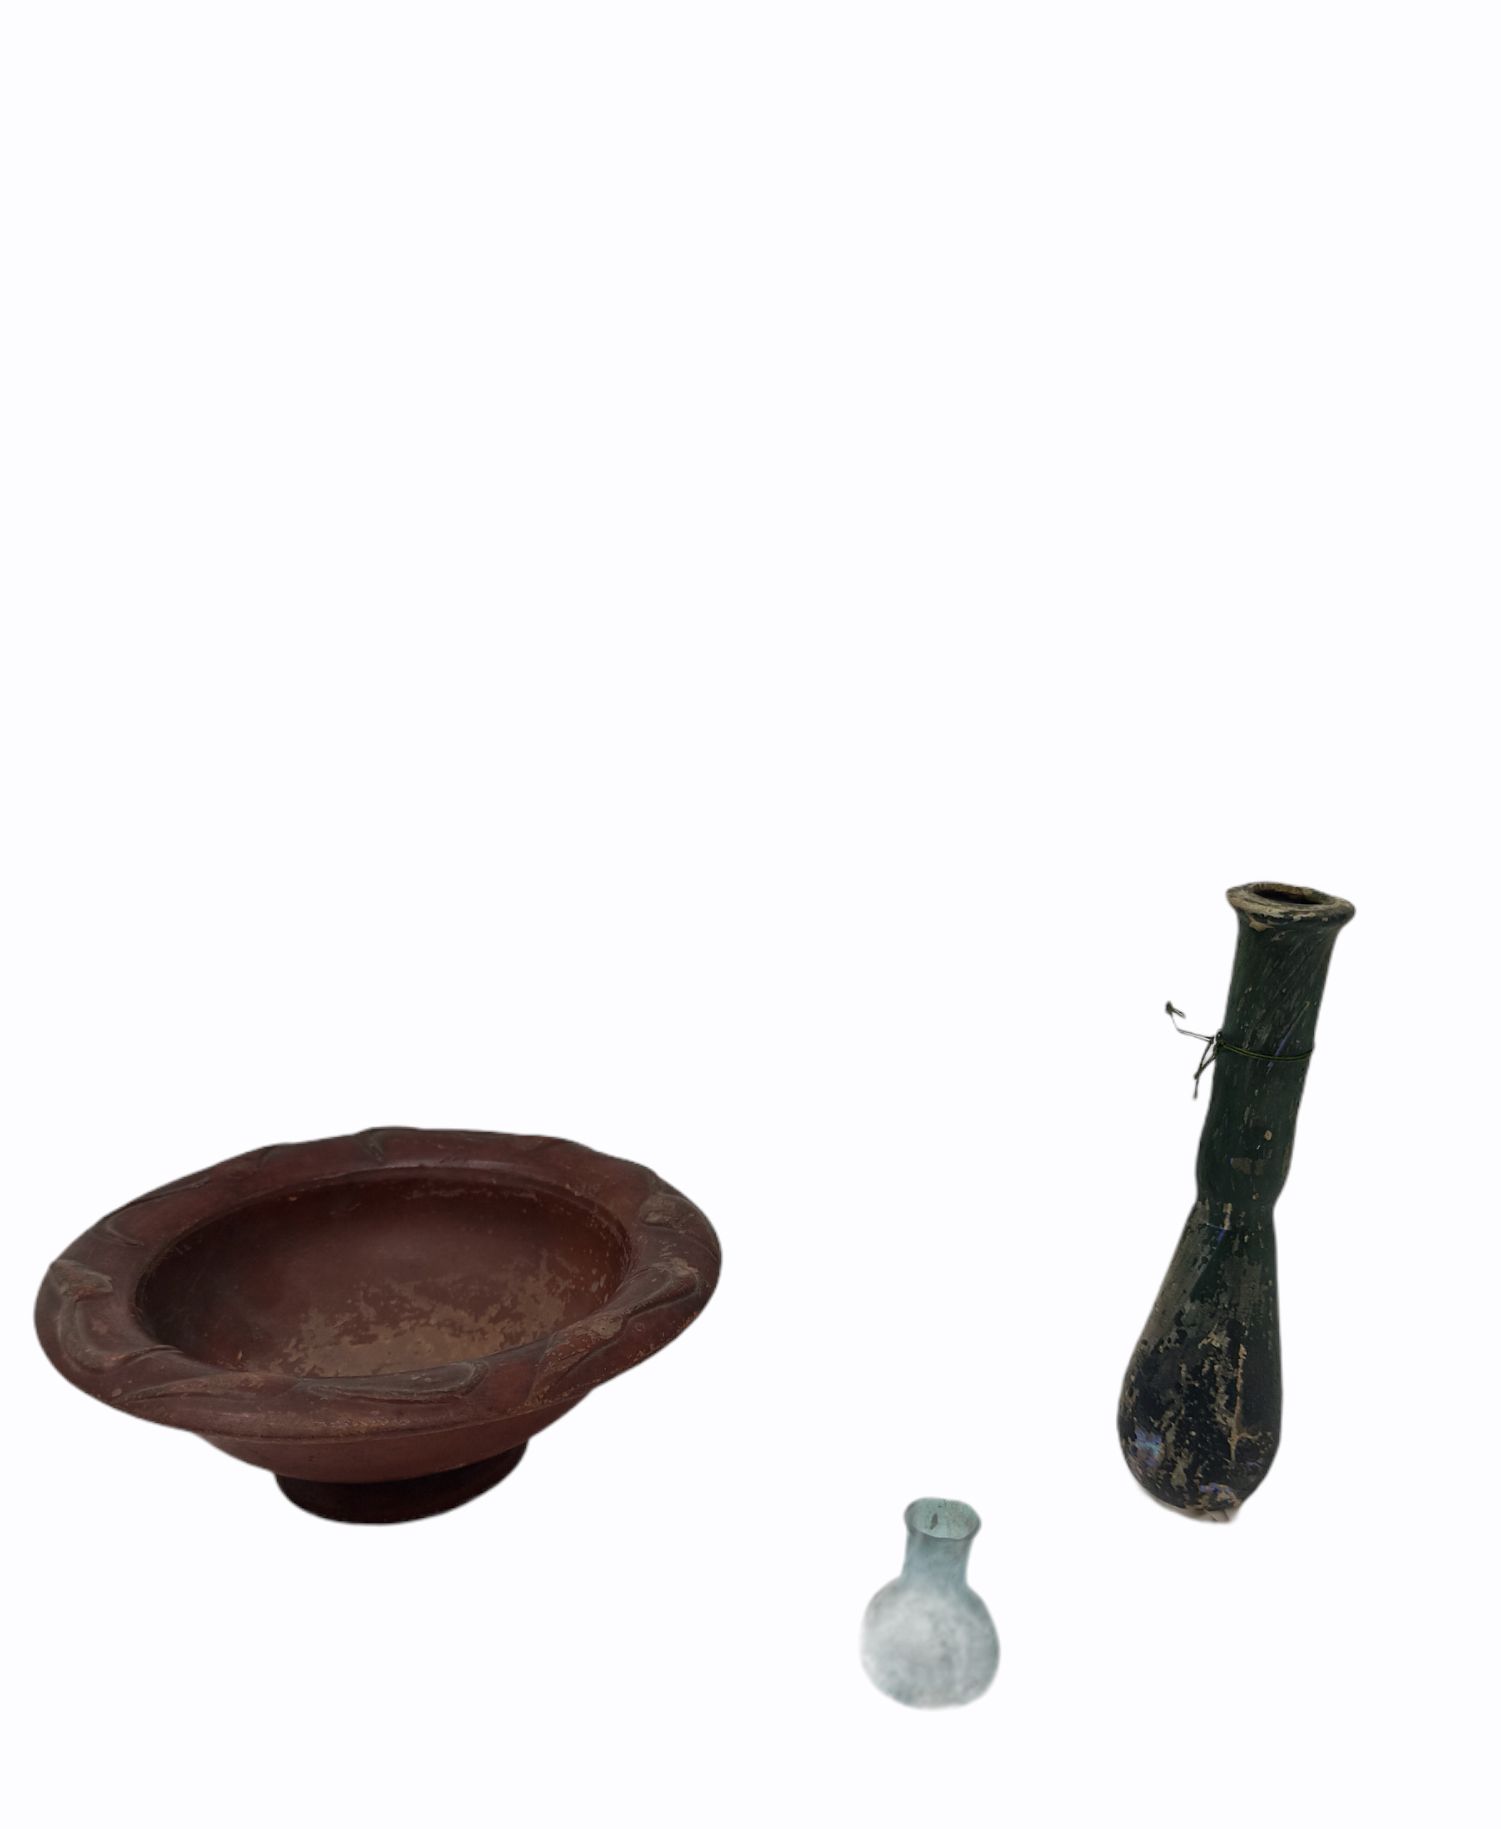 Null 拍品包括一个用Barbotine装饰的Marli杯和两个Balsamaires，其中一个是微型的。

赤土和彩虹色的蓝玻璃。

罗马时期，1-2世纪